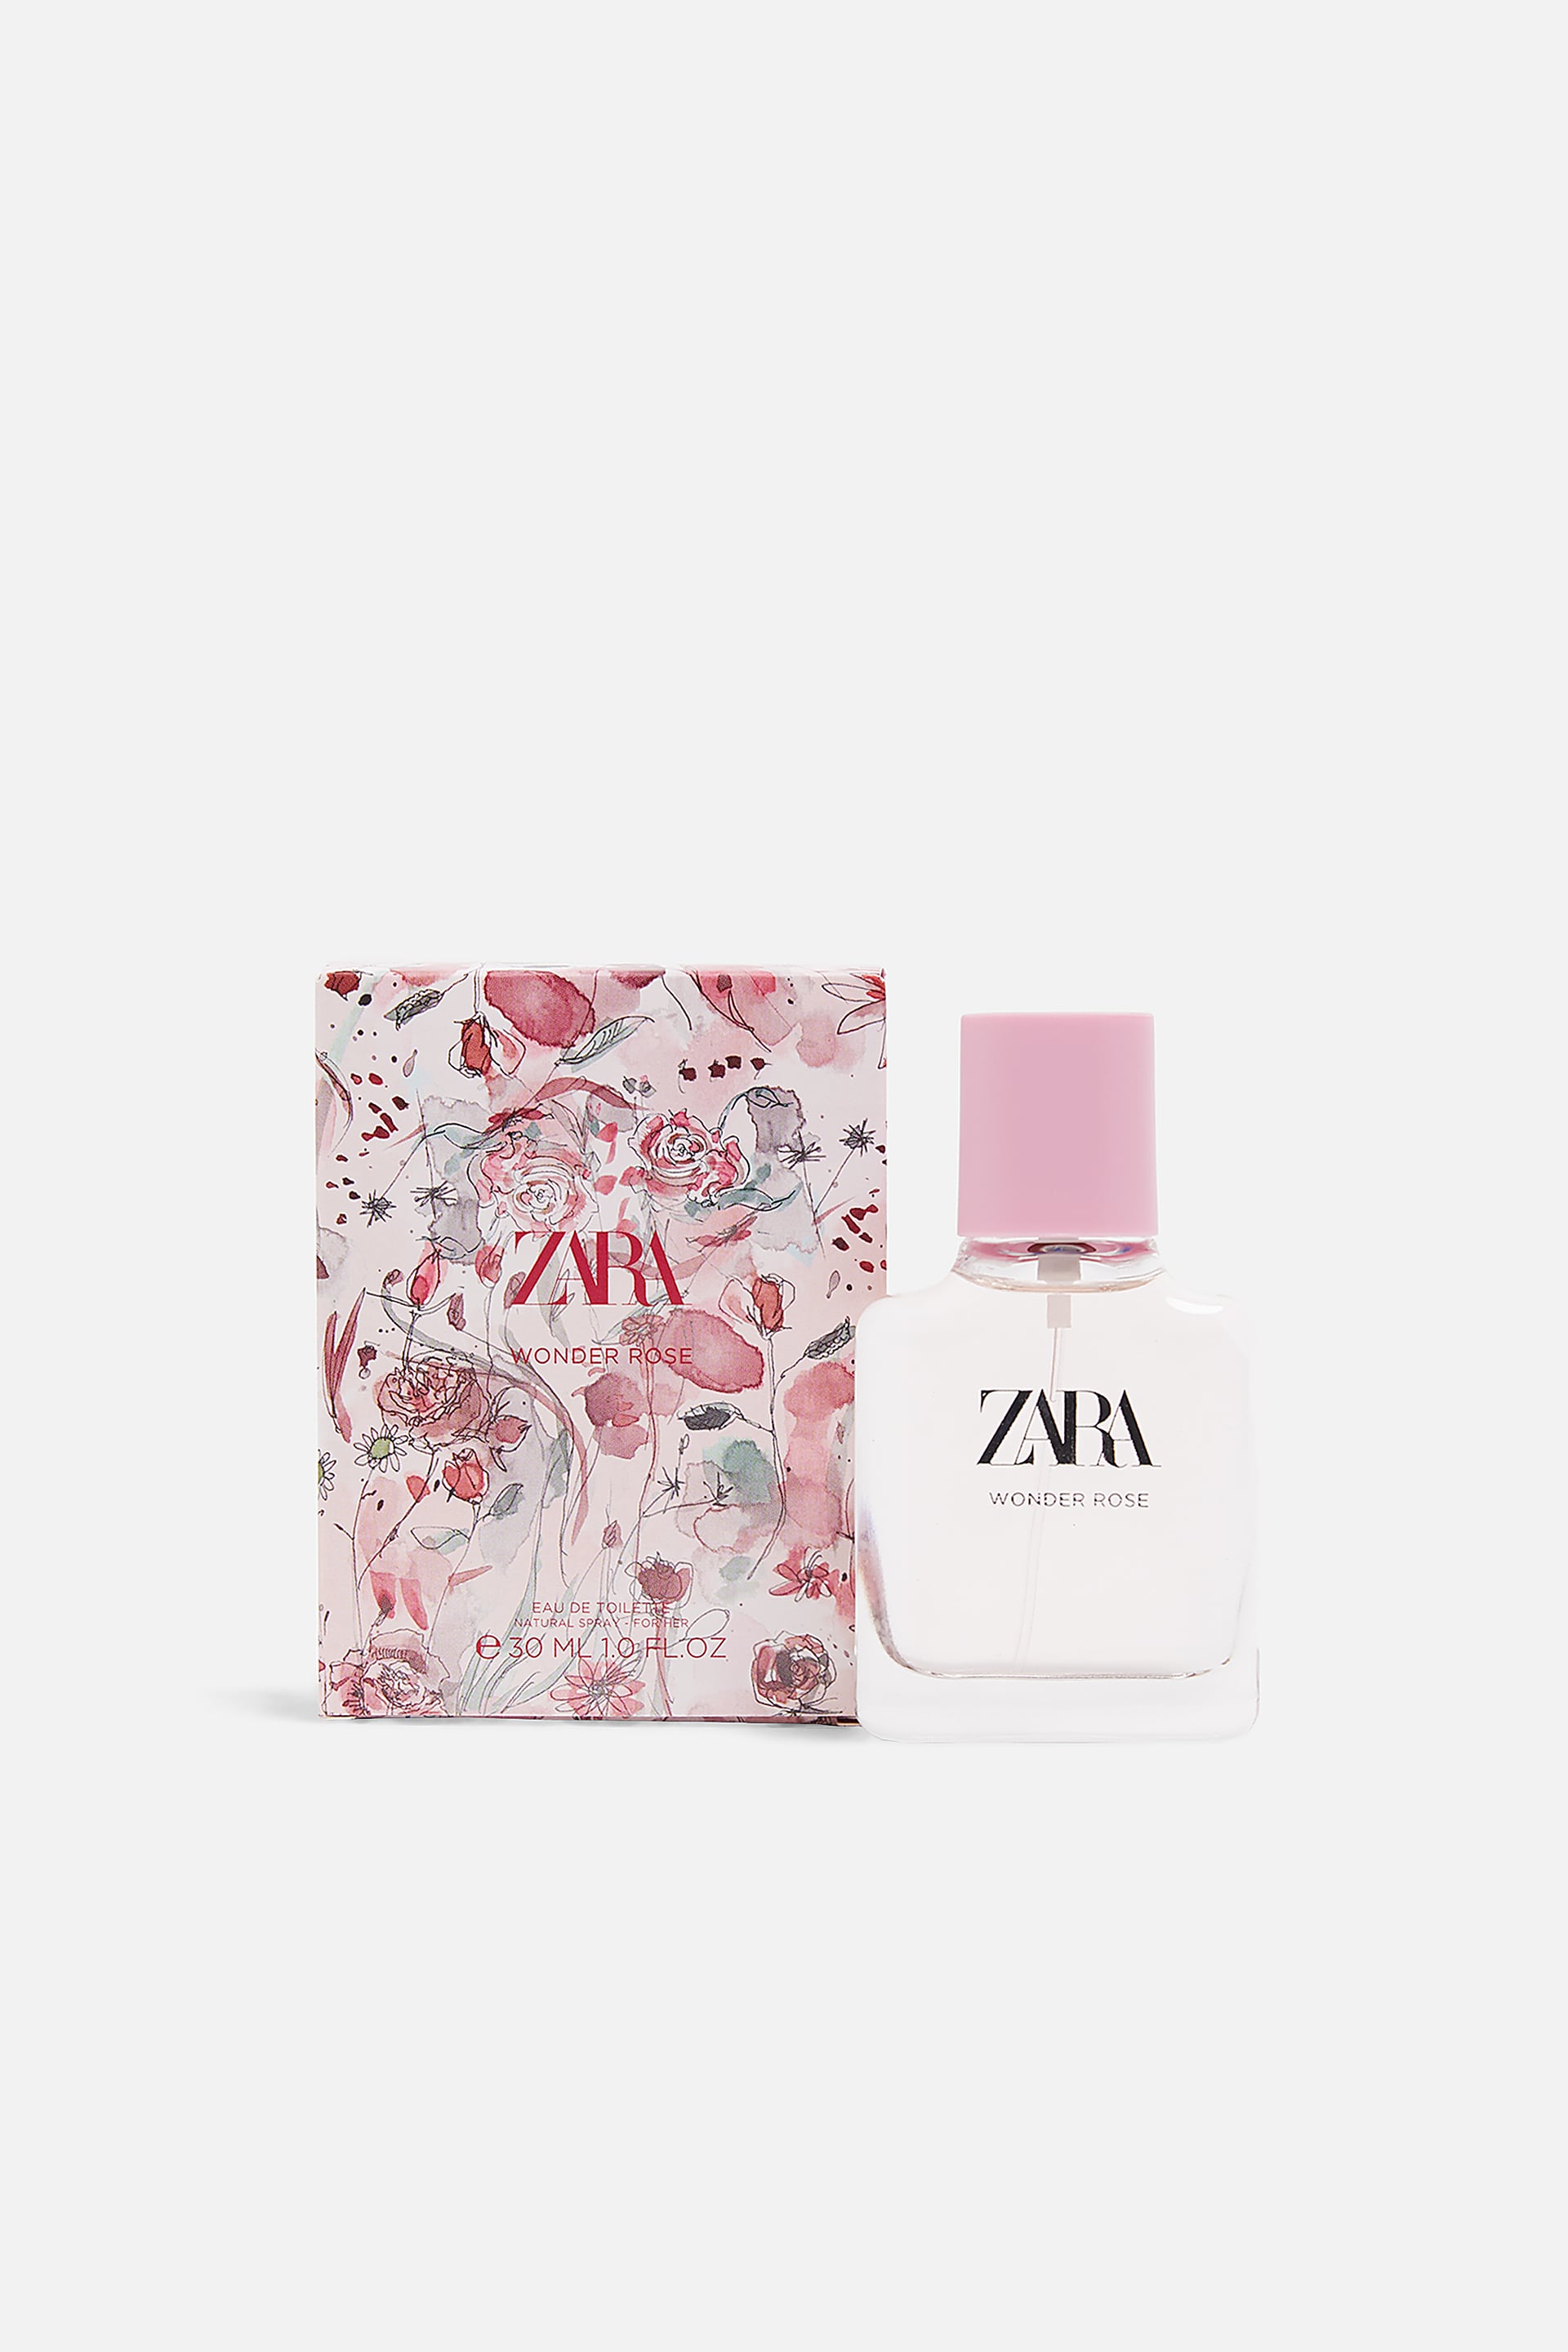 Wonder Rose 2019 Zara perfume - a new 